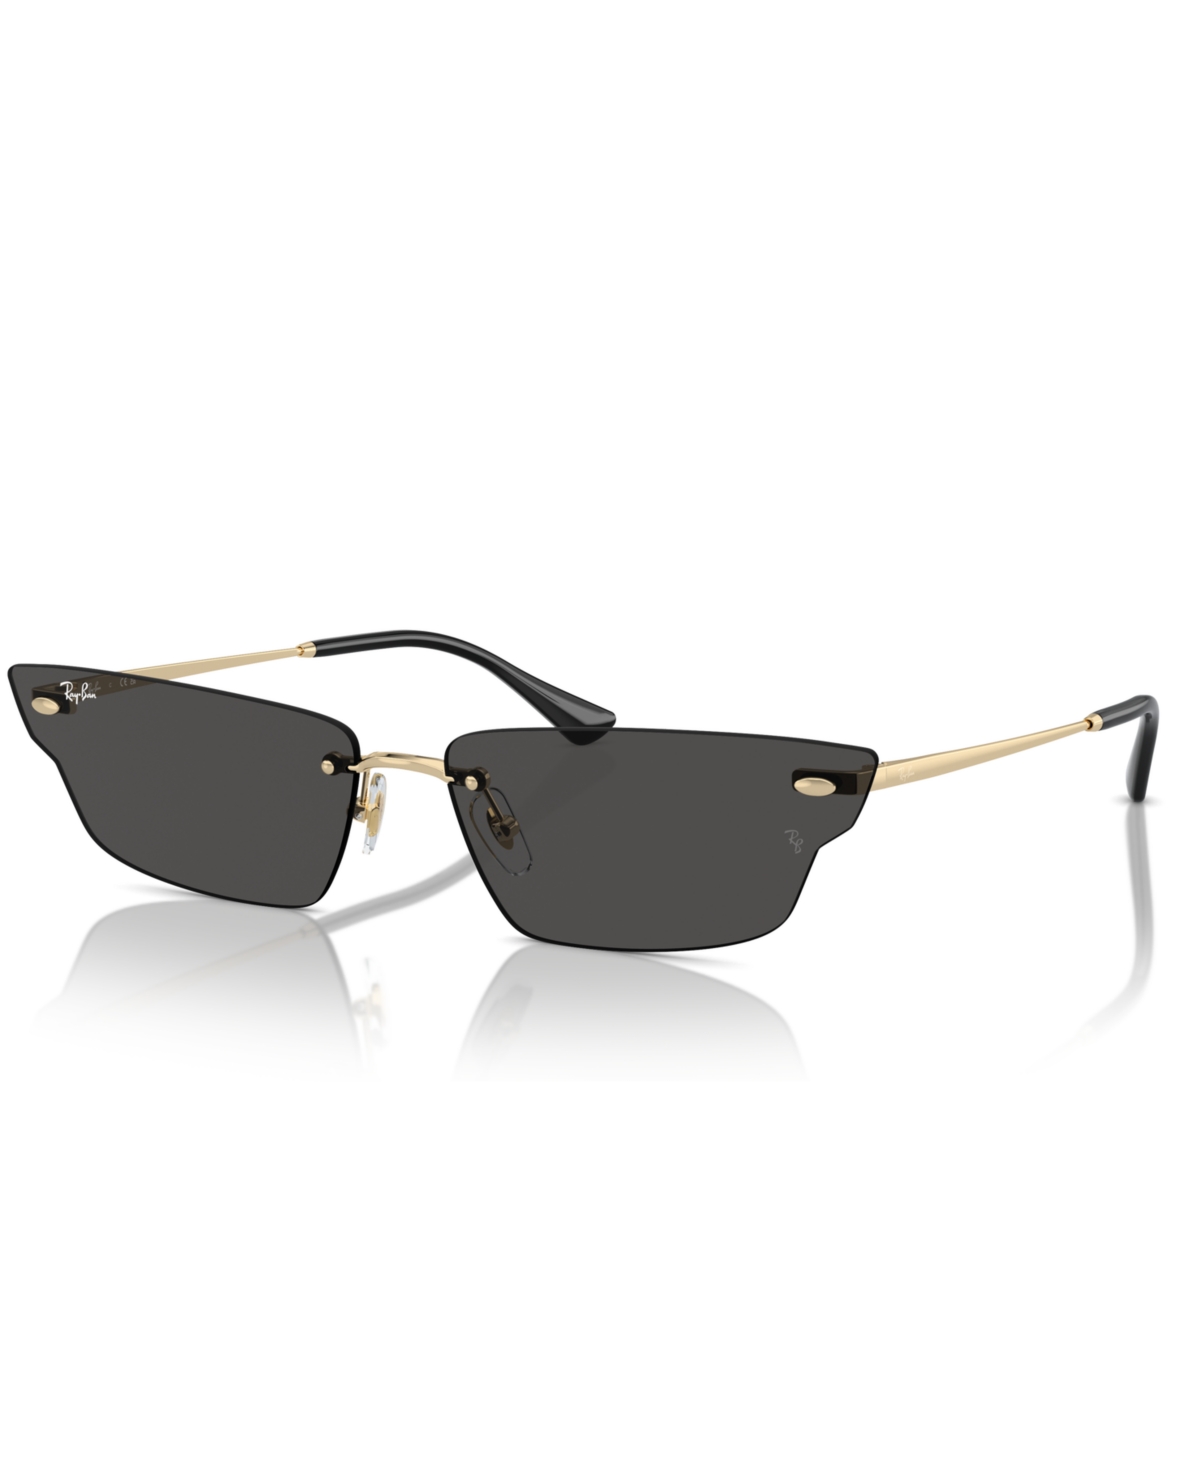 Unisex Sunglasses, Anh Rb3731 - Light Gold